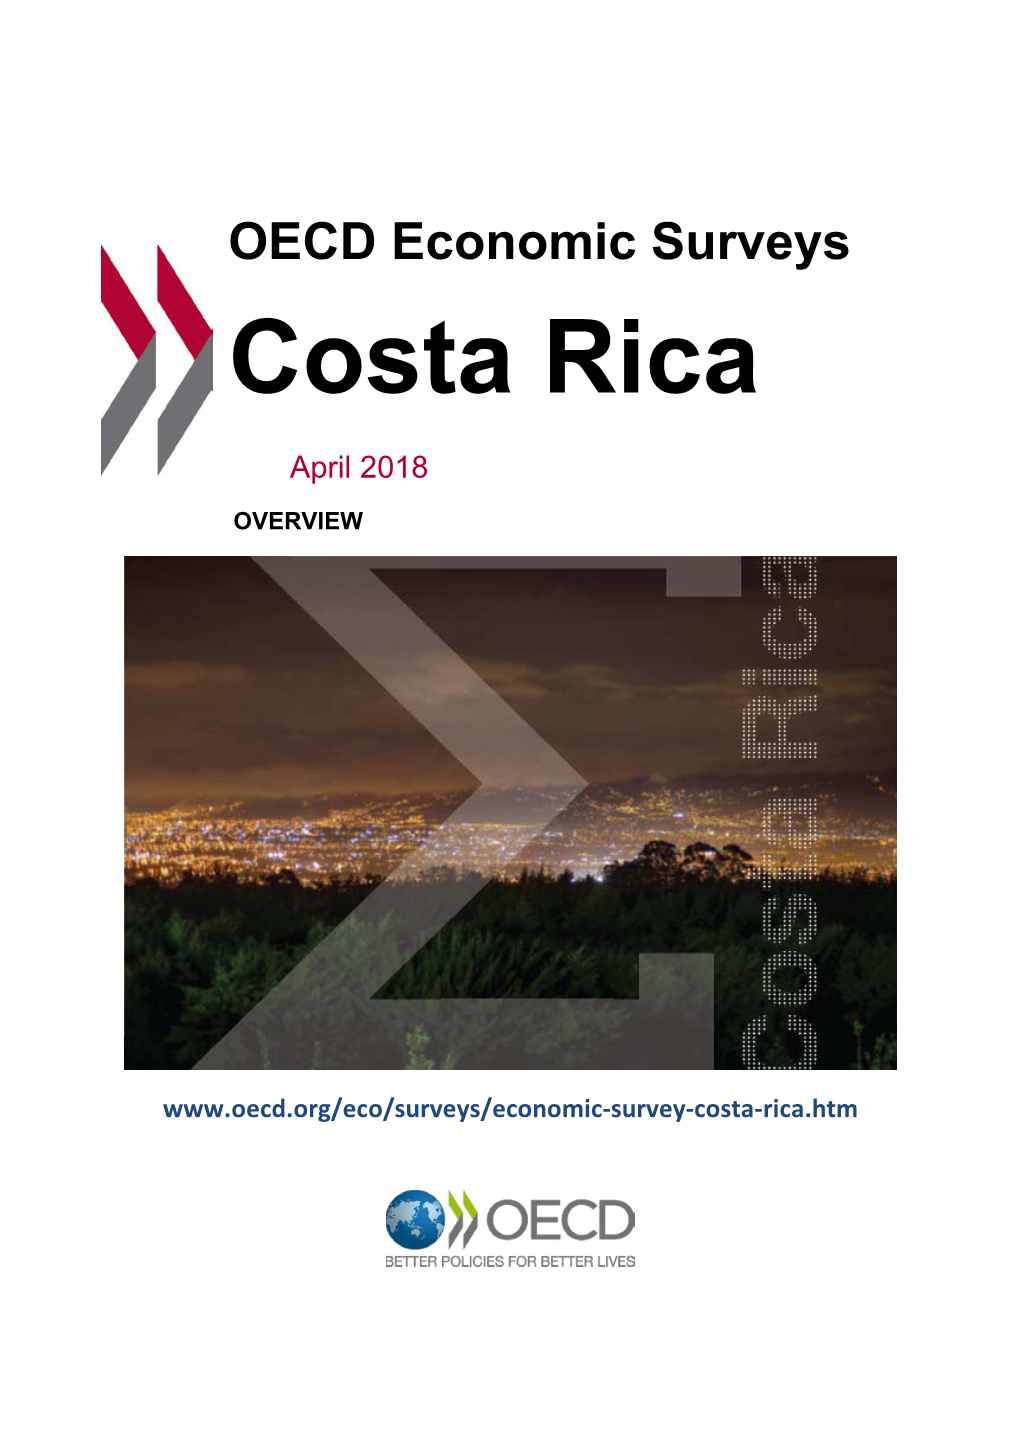 OECD Economic Surveys Costa Rica